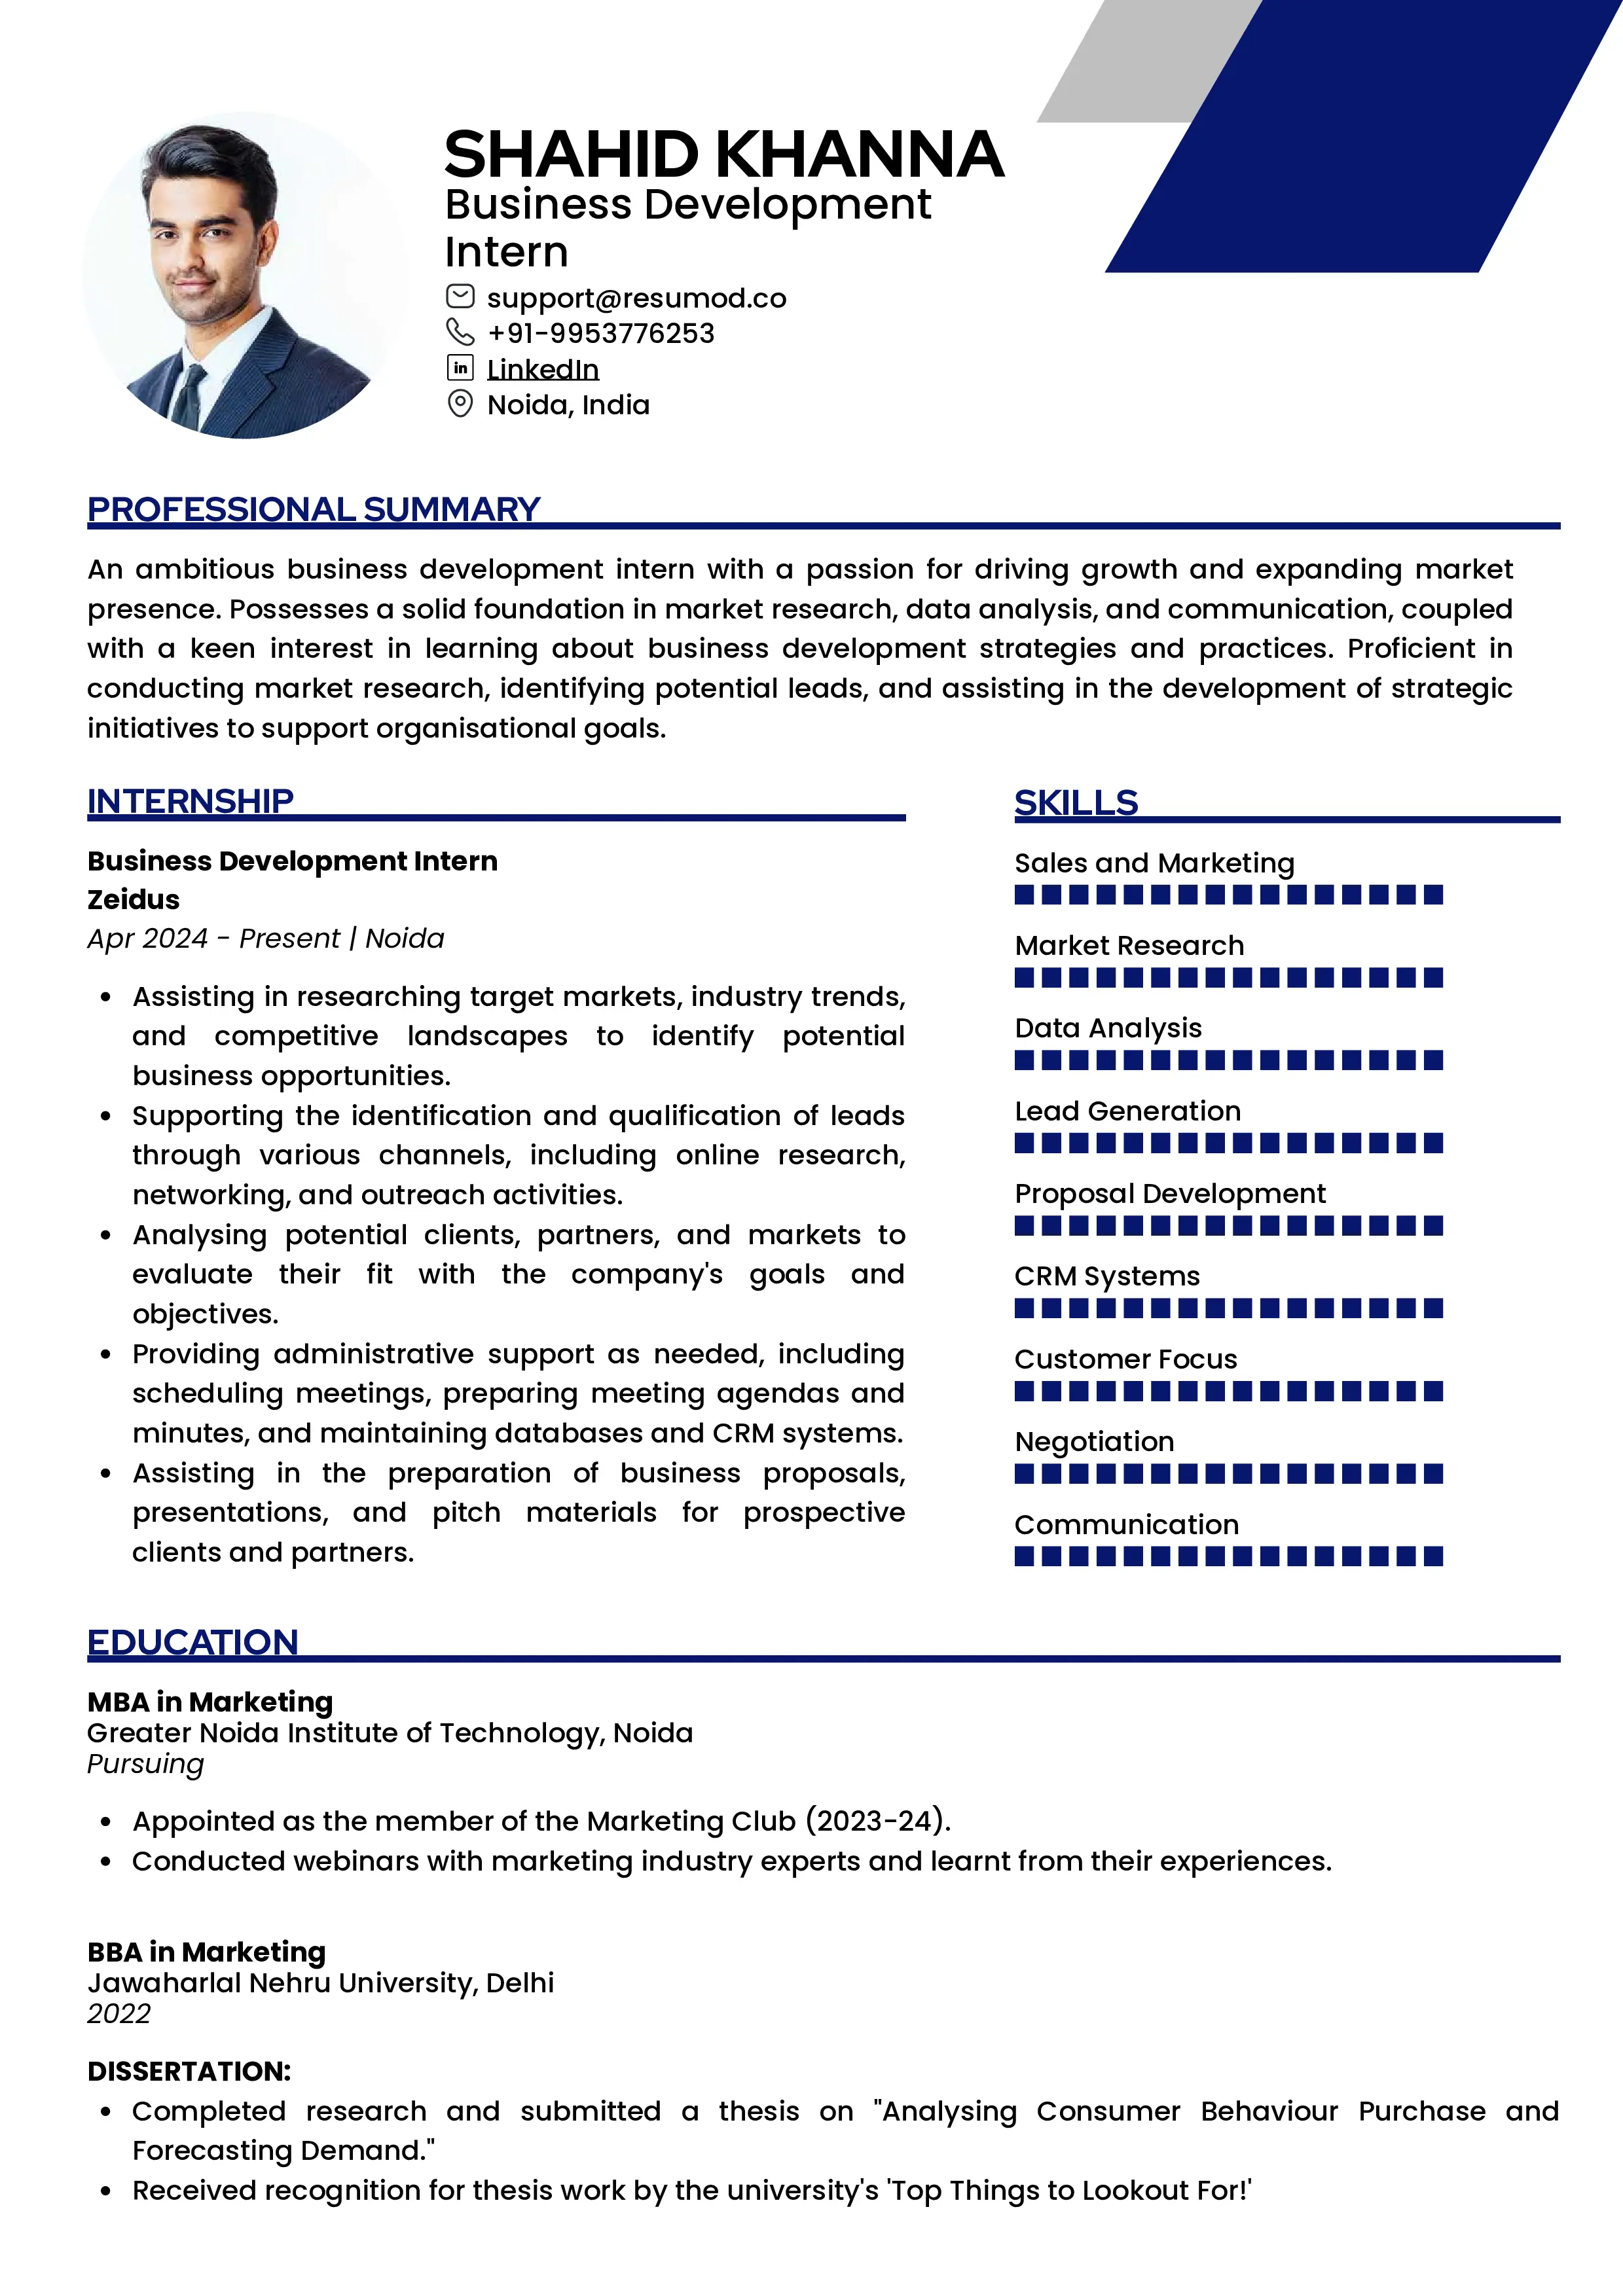 Sample Resume of Business Development Intern | Free Resume Templates & Samples on Resumod.co